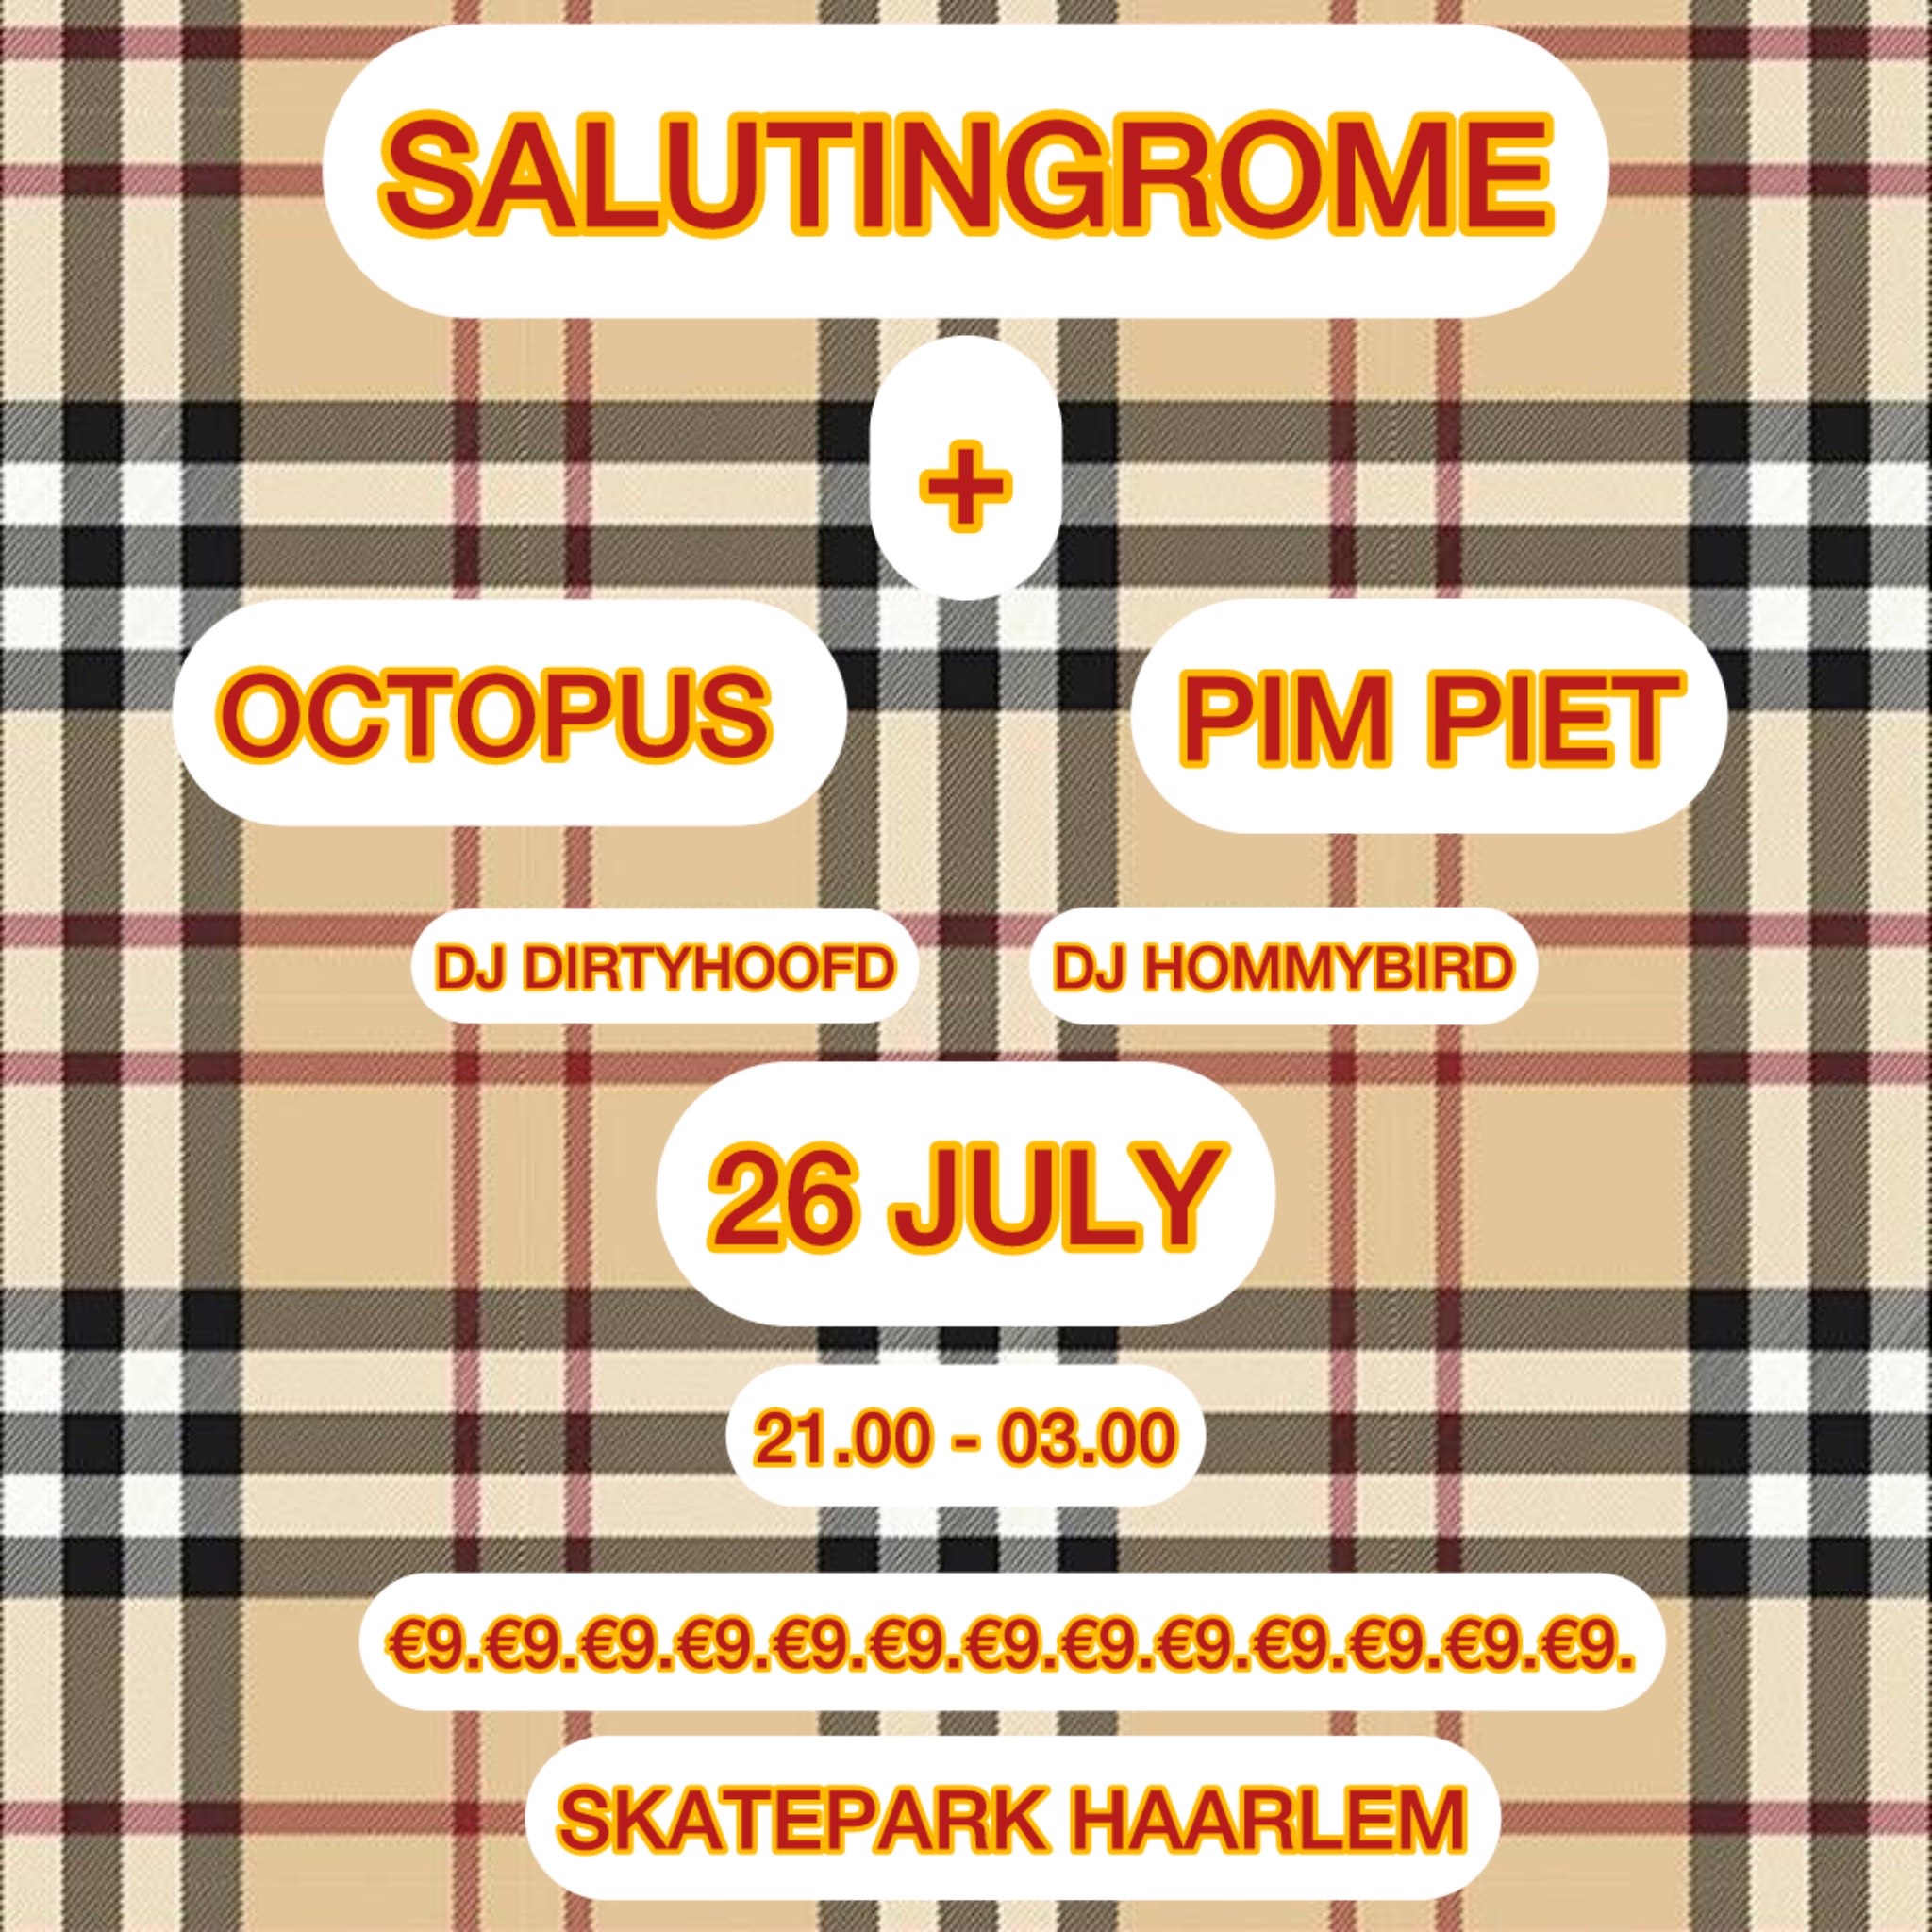 19 juli: Salutingrome, Octopus, Pim Piet in Skatepark Haarlem